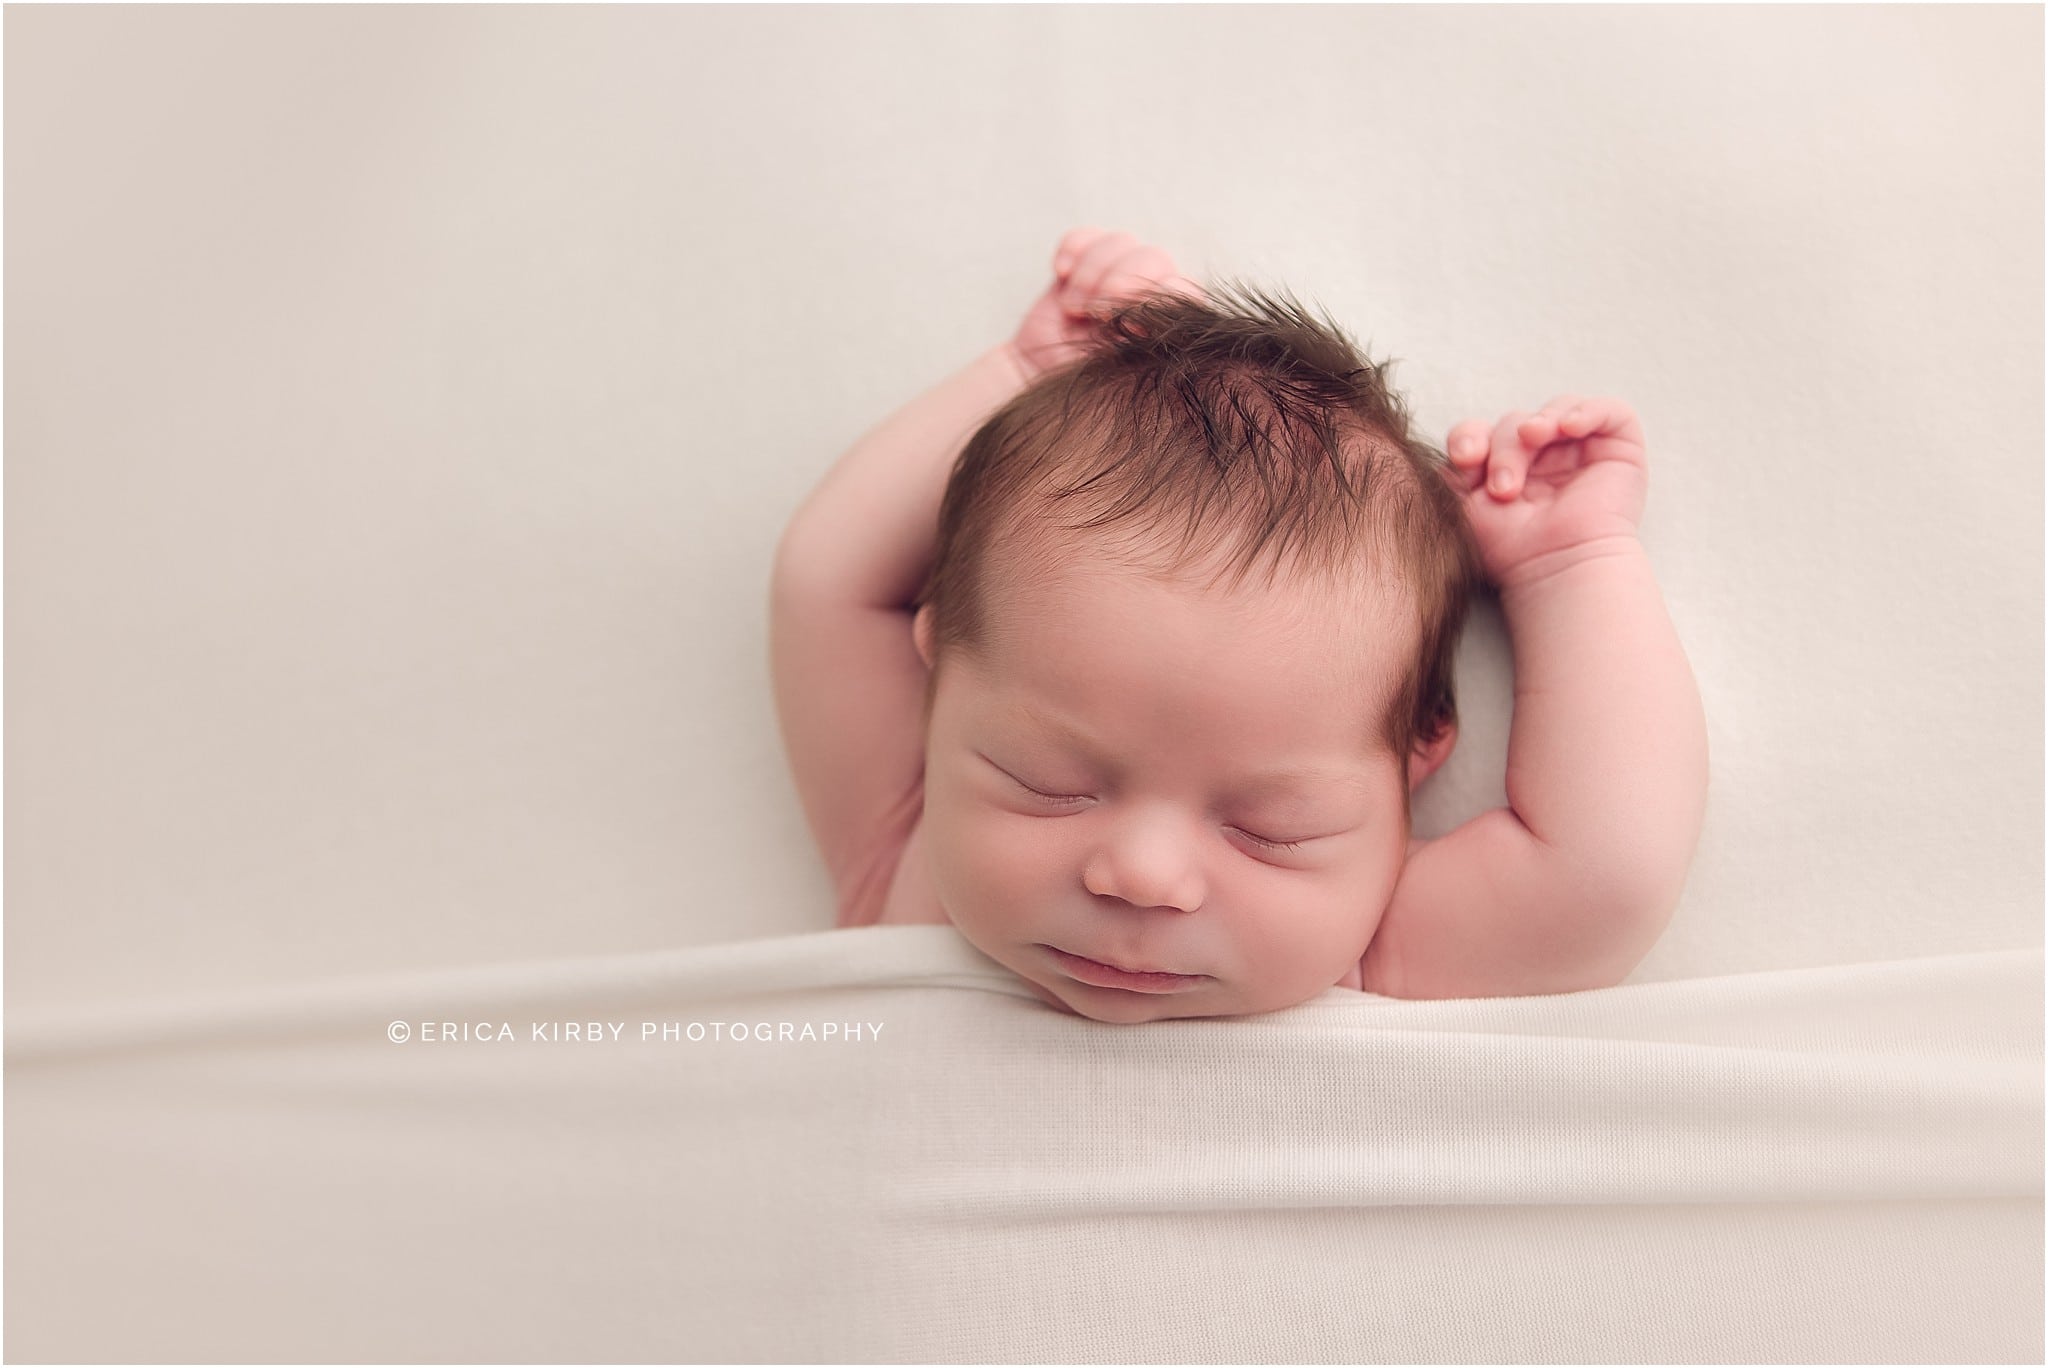 Newborn Photography NWA | Baby boy newborn photography session in Bentonville Arkansas | neutral baby boy photos northwest arkansas erica kirby photography